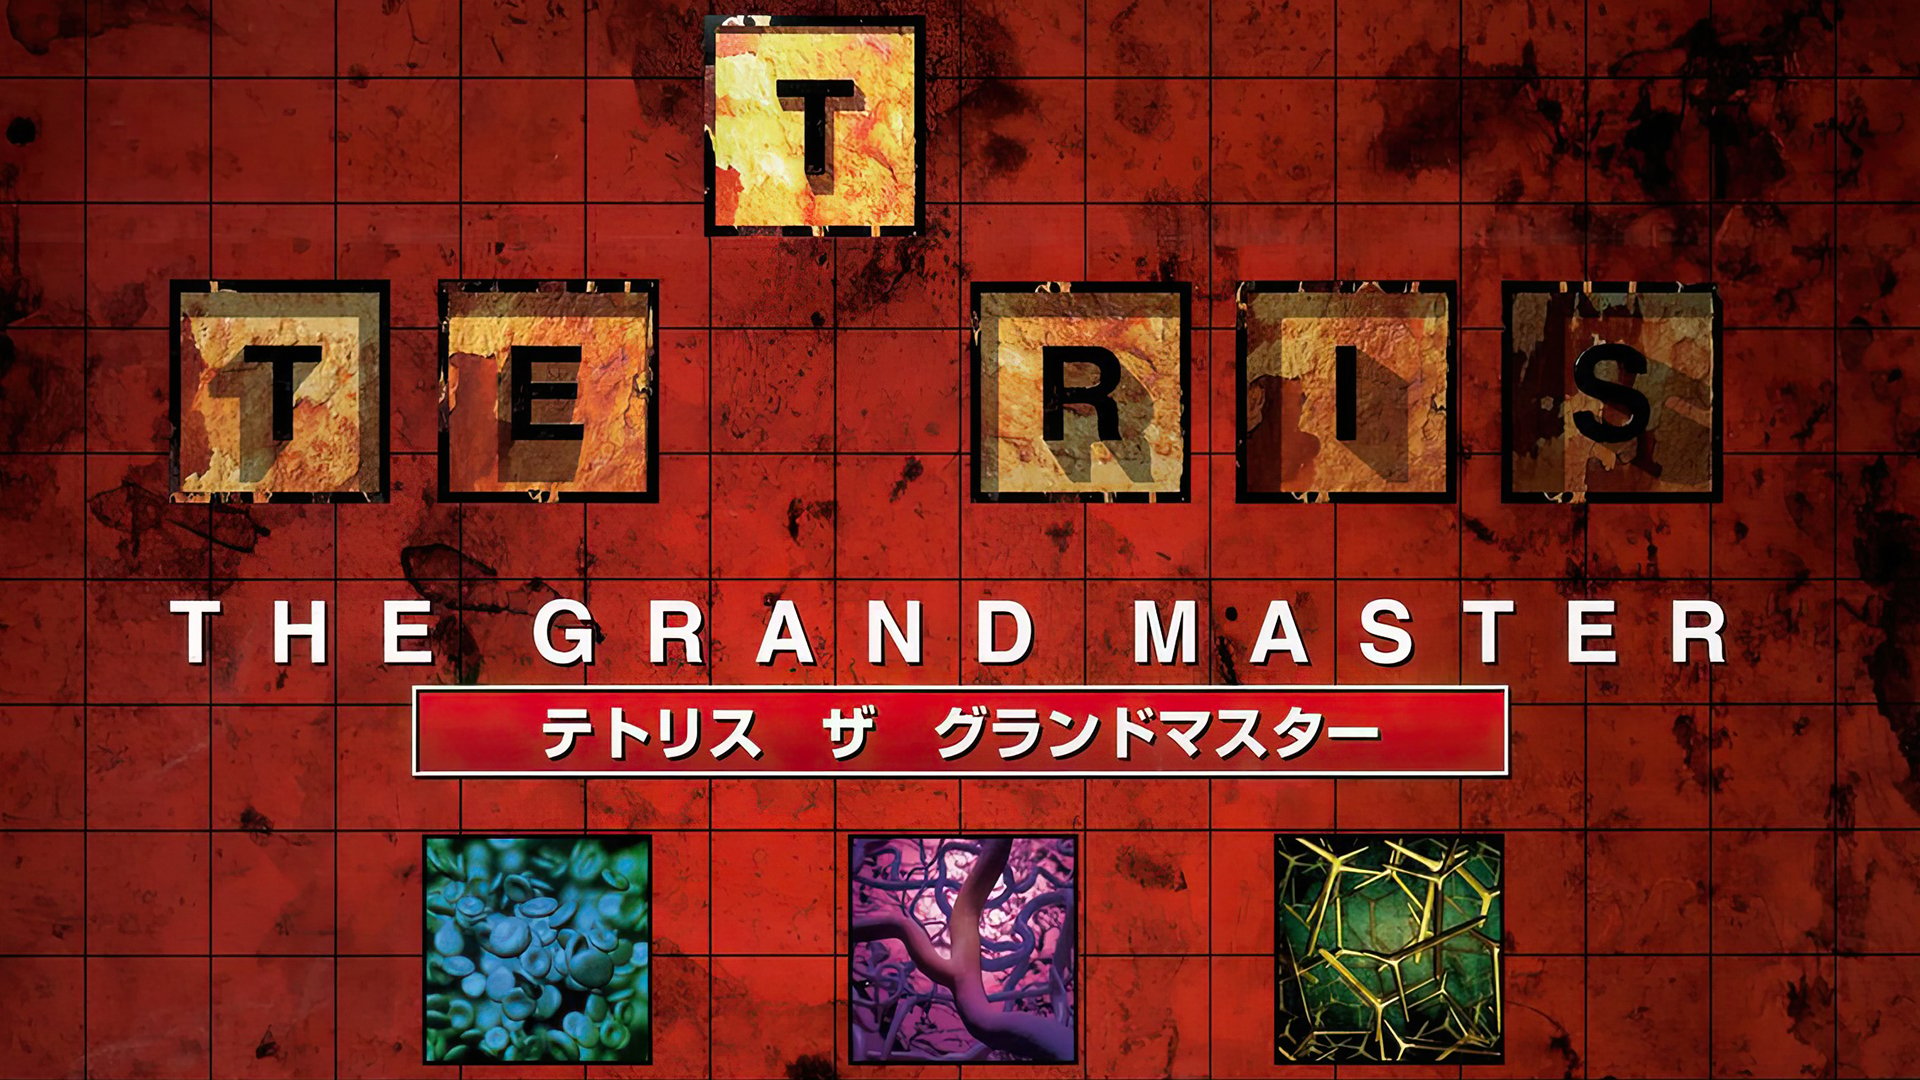 Tetris The Grand Master - TetrisWiki